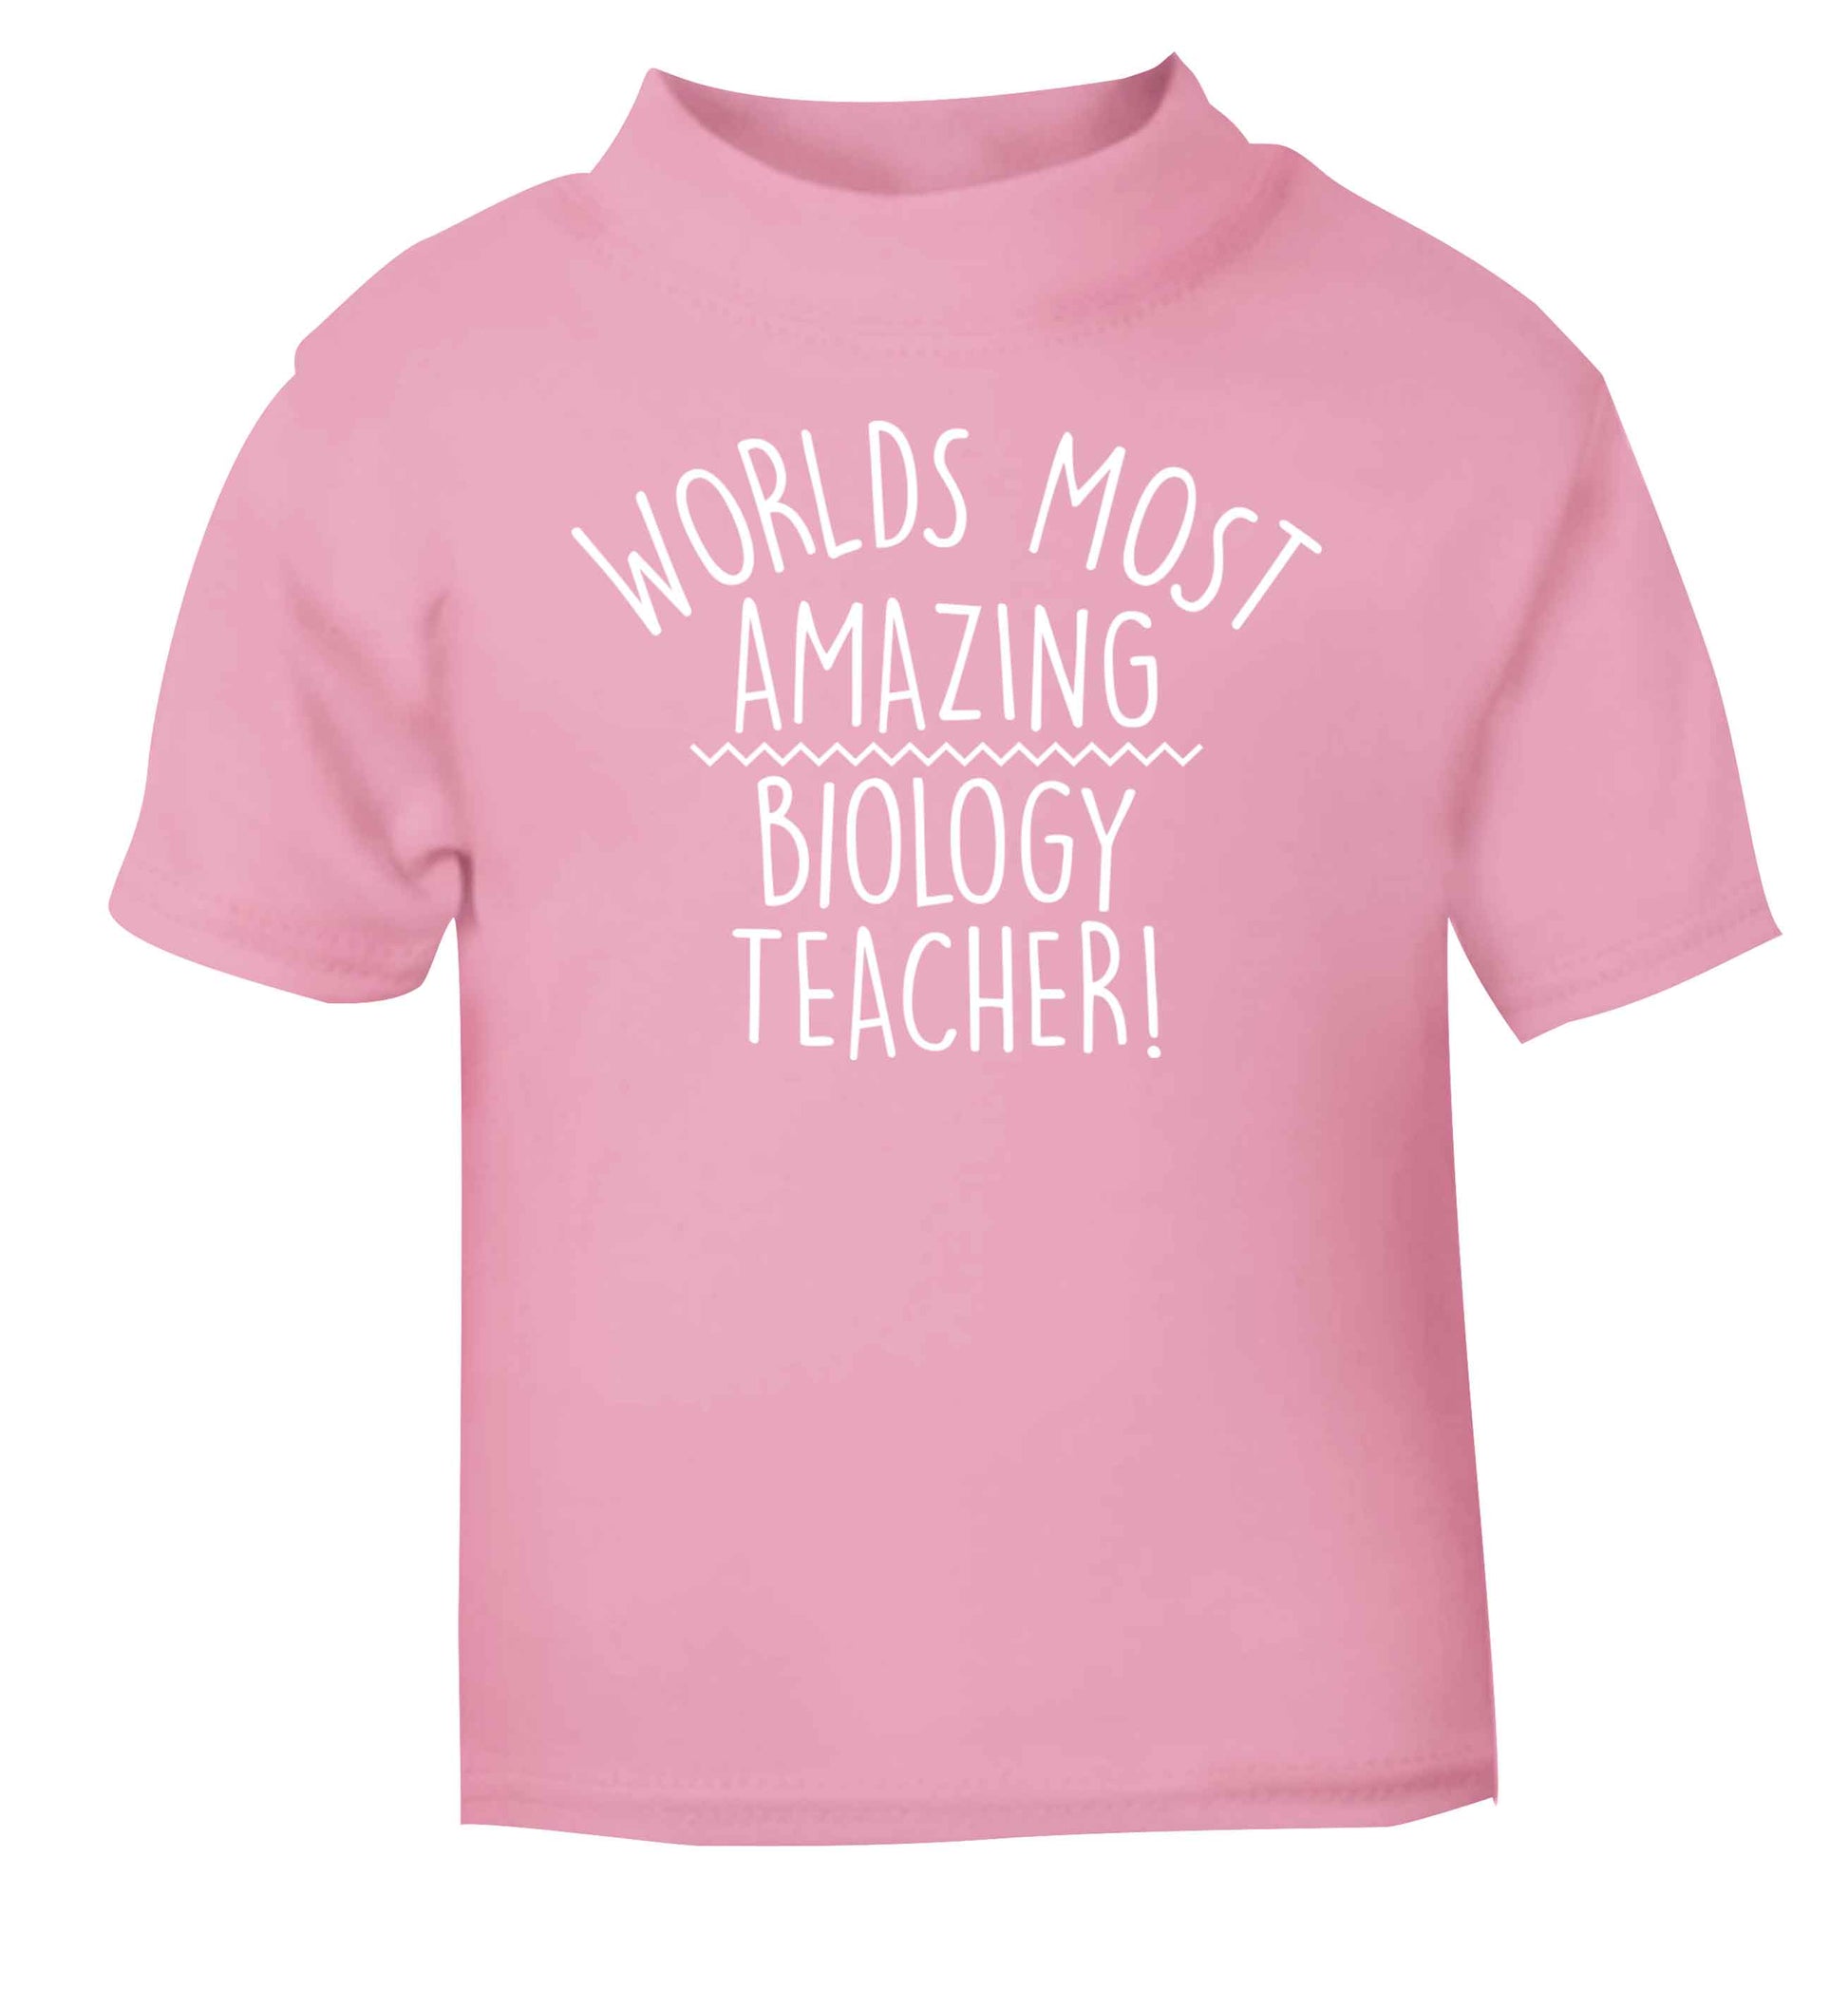 Worlds most amazing biology teacher light pink baby toddler Tshirt 2 Years